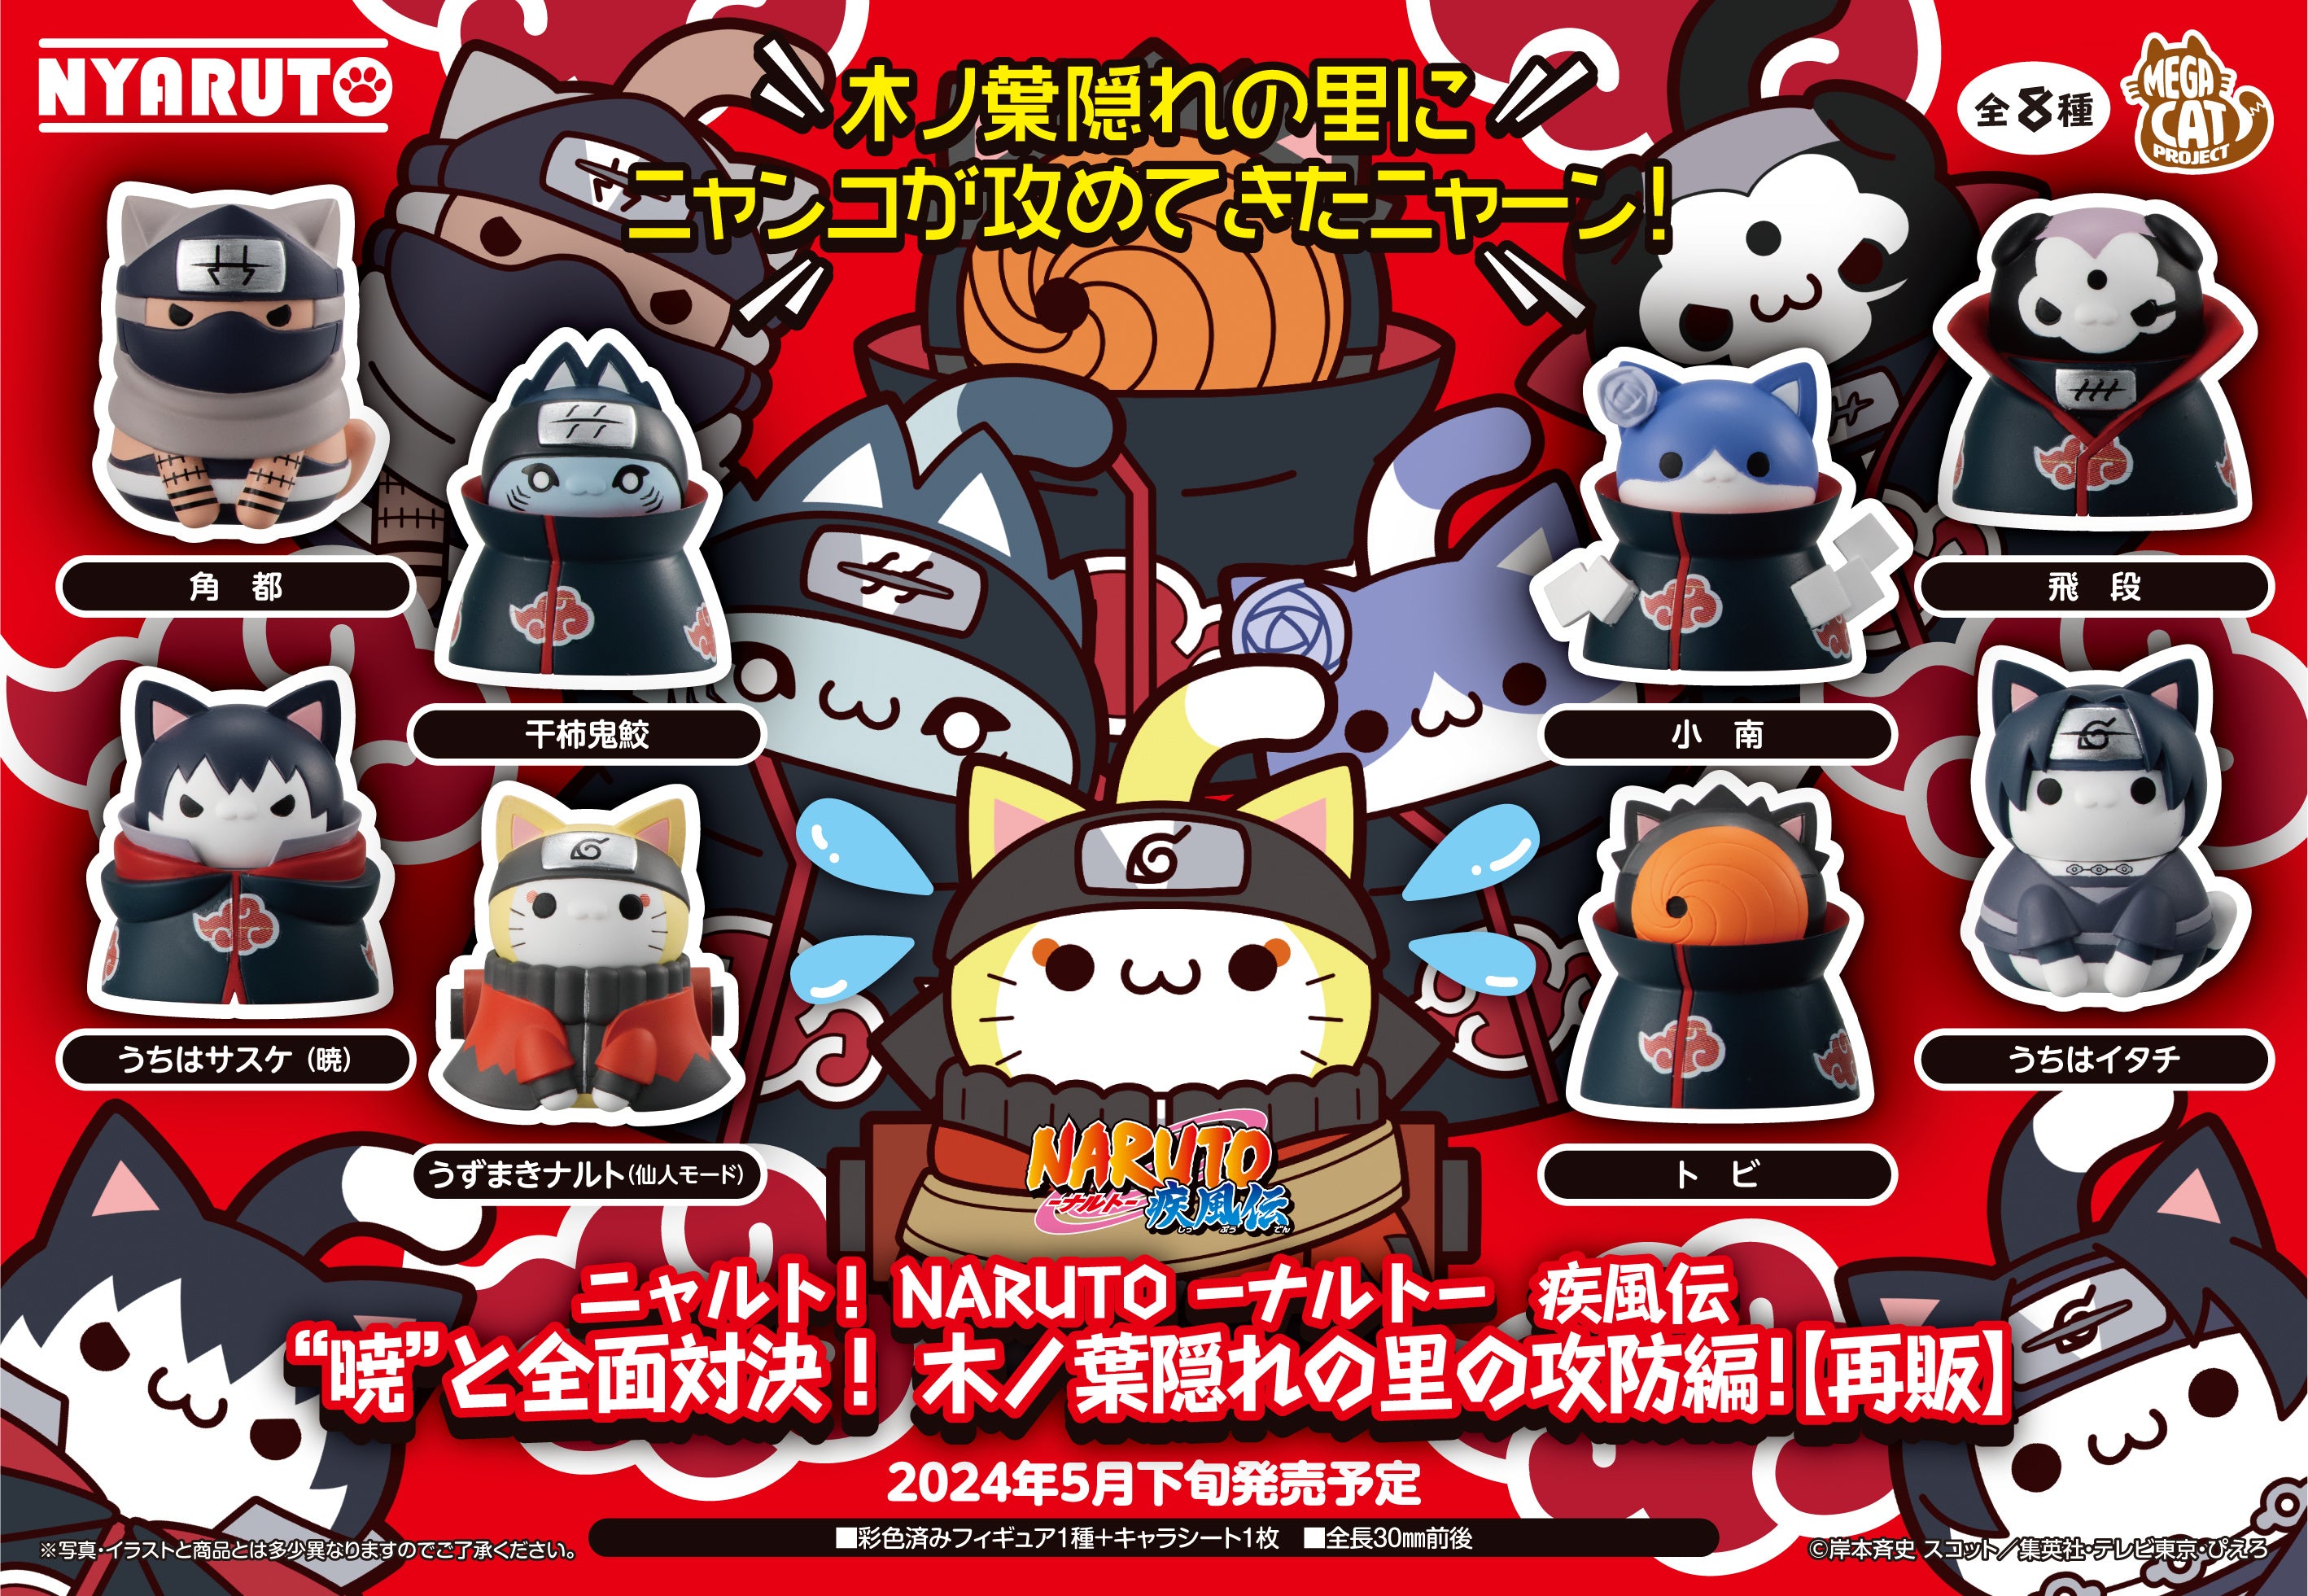 NARUTO SHIPPUDEN - MEGA CAT PROJECT - NYARUTO! DEFENSE BATTLE OF VILLAGE OF KONOHA! **Pre-Order**